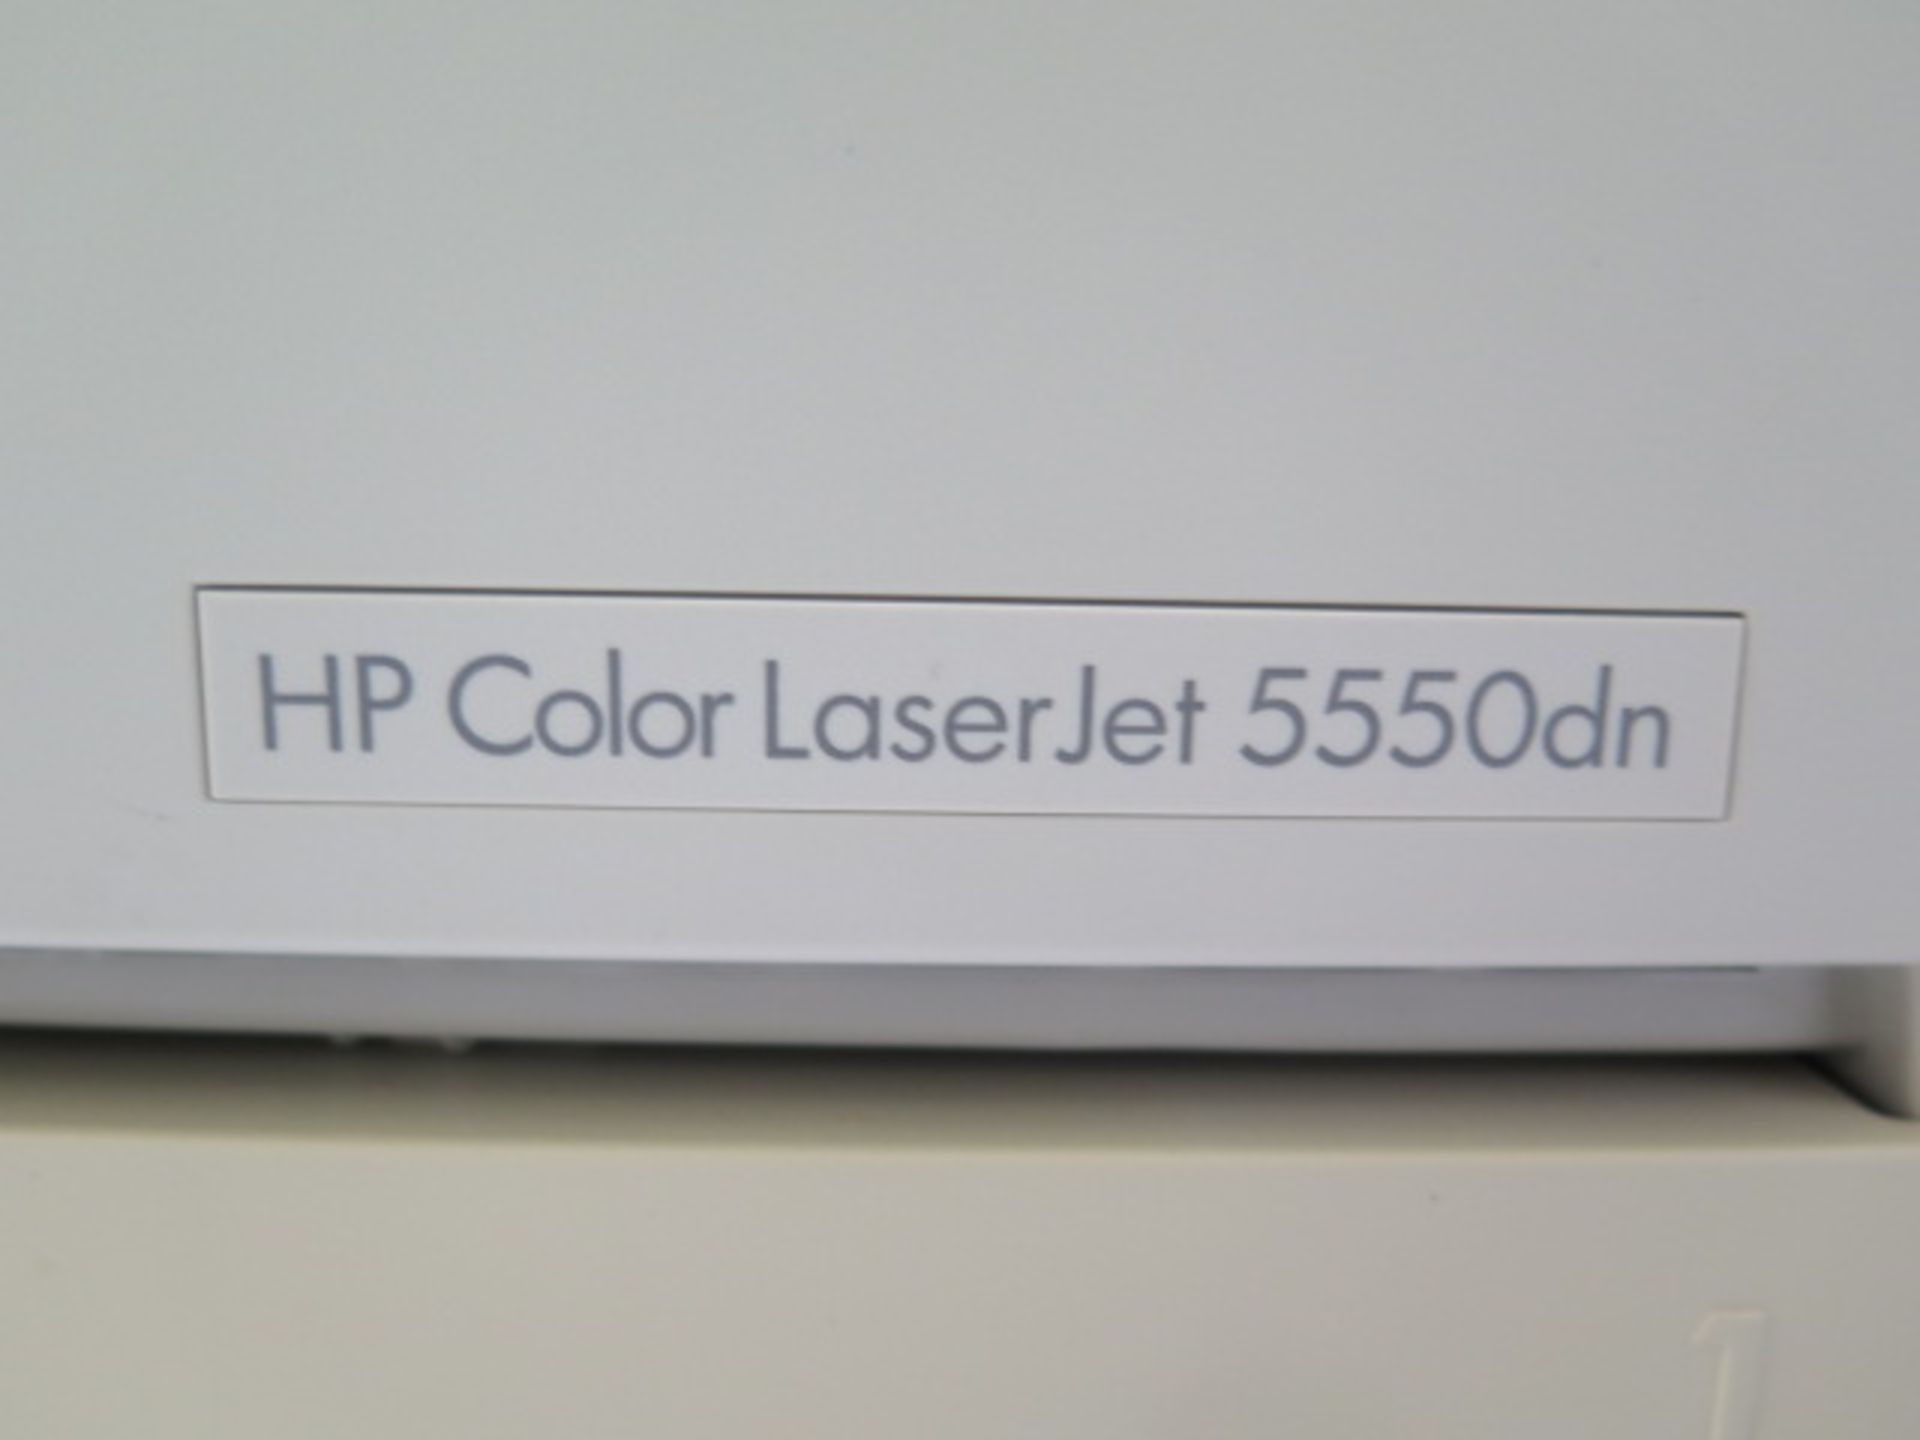 Hewlett Packard Color LaserJet 5550dn Color Printer (SOLD AS-IS - NO WARRANTY) - Image 6 of 6